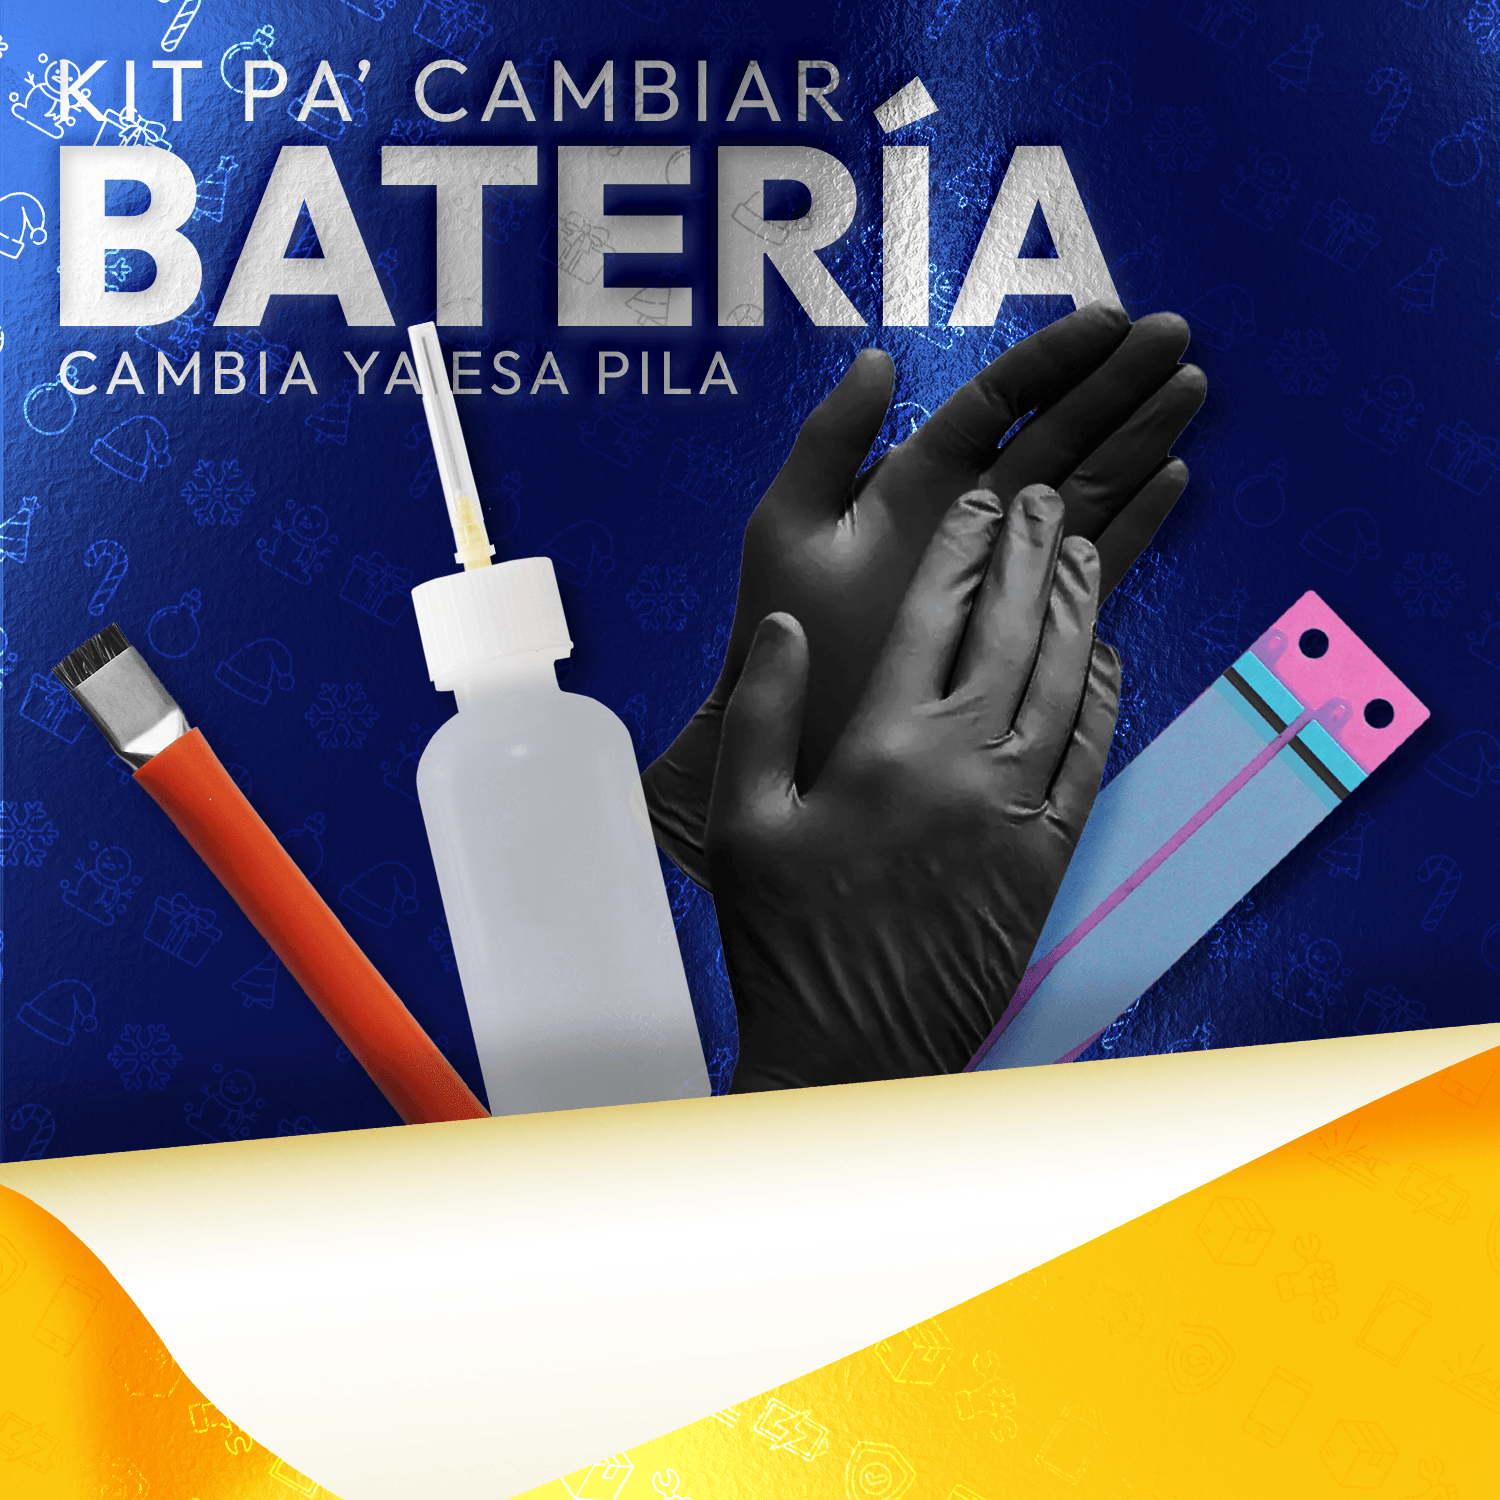 Kit Pa' Cambiar Batería | FixOEM |+2,000 reseñas 4.8/5 ⭐